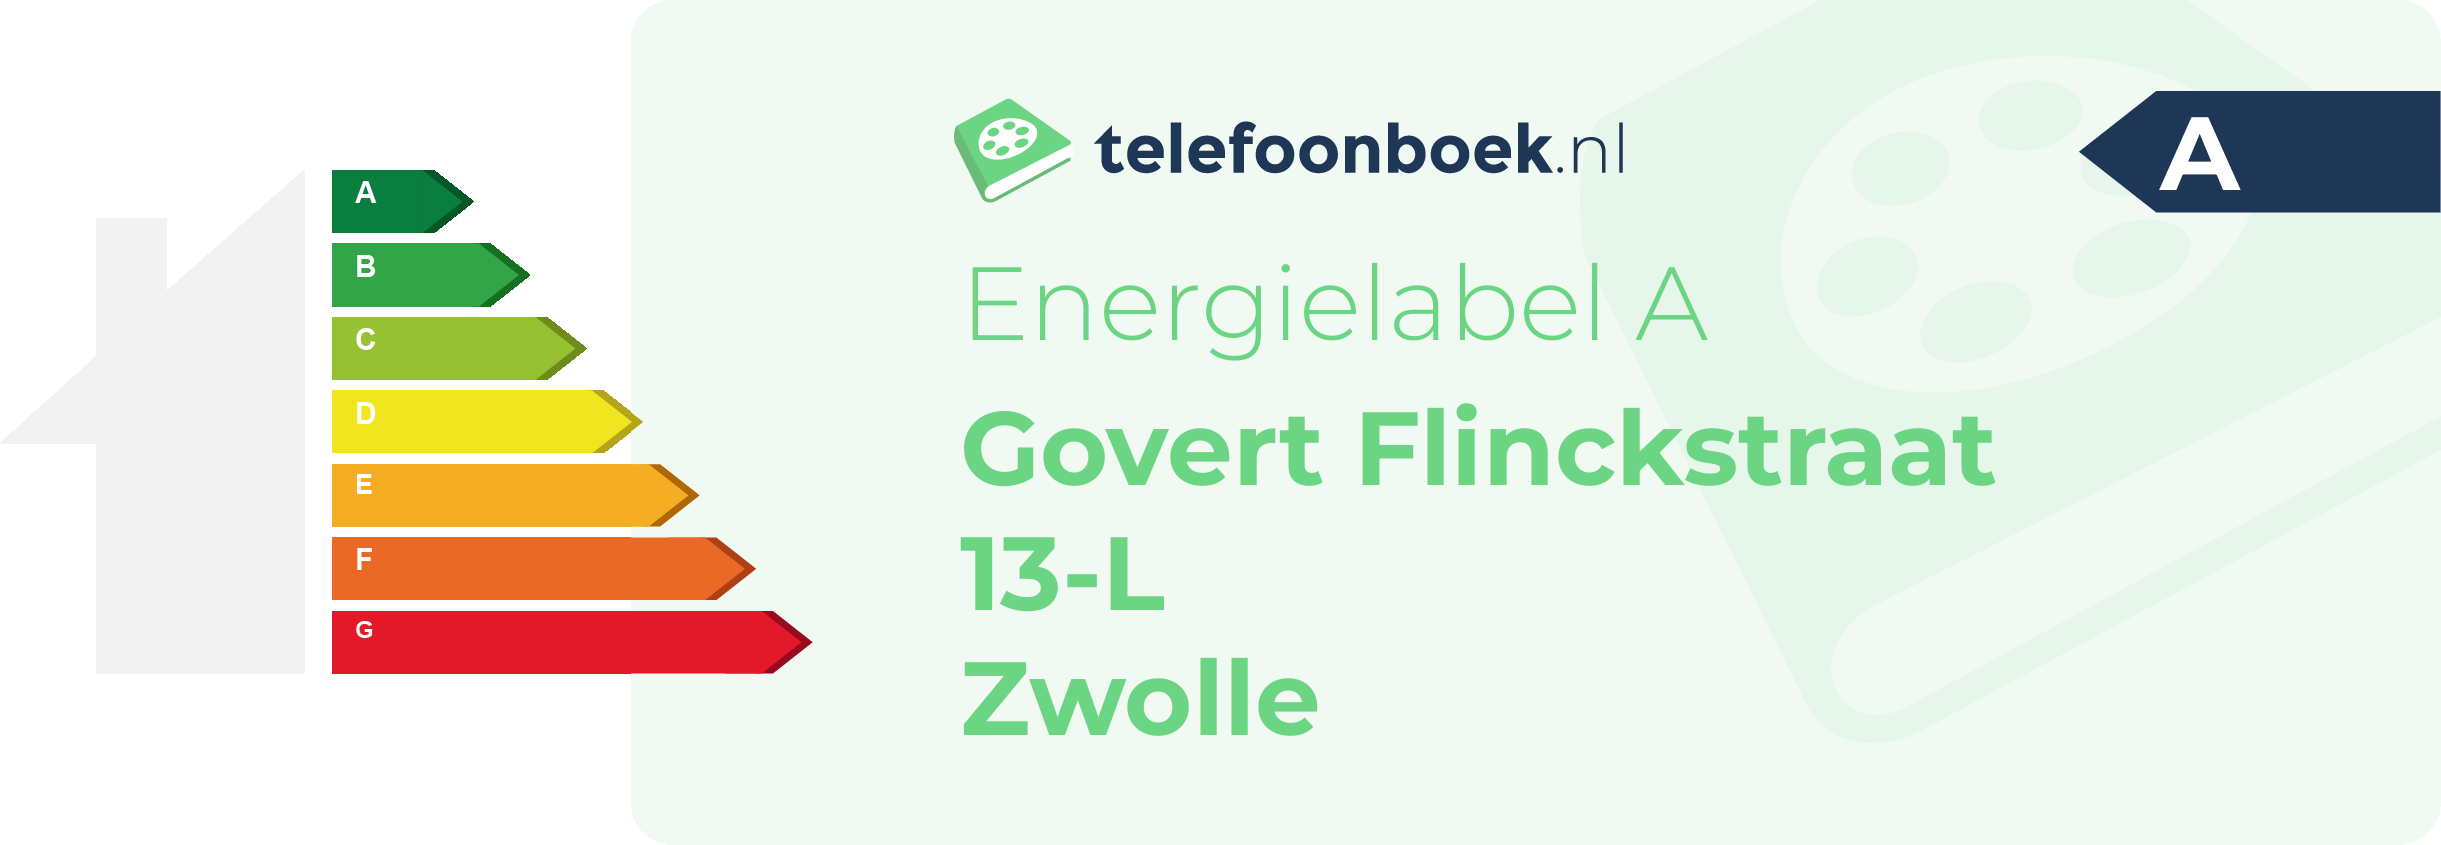 Energielabel Govert Flinckstraat 13-L Zwolle